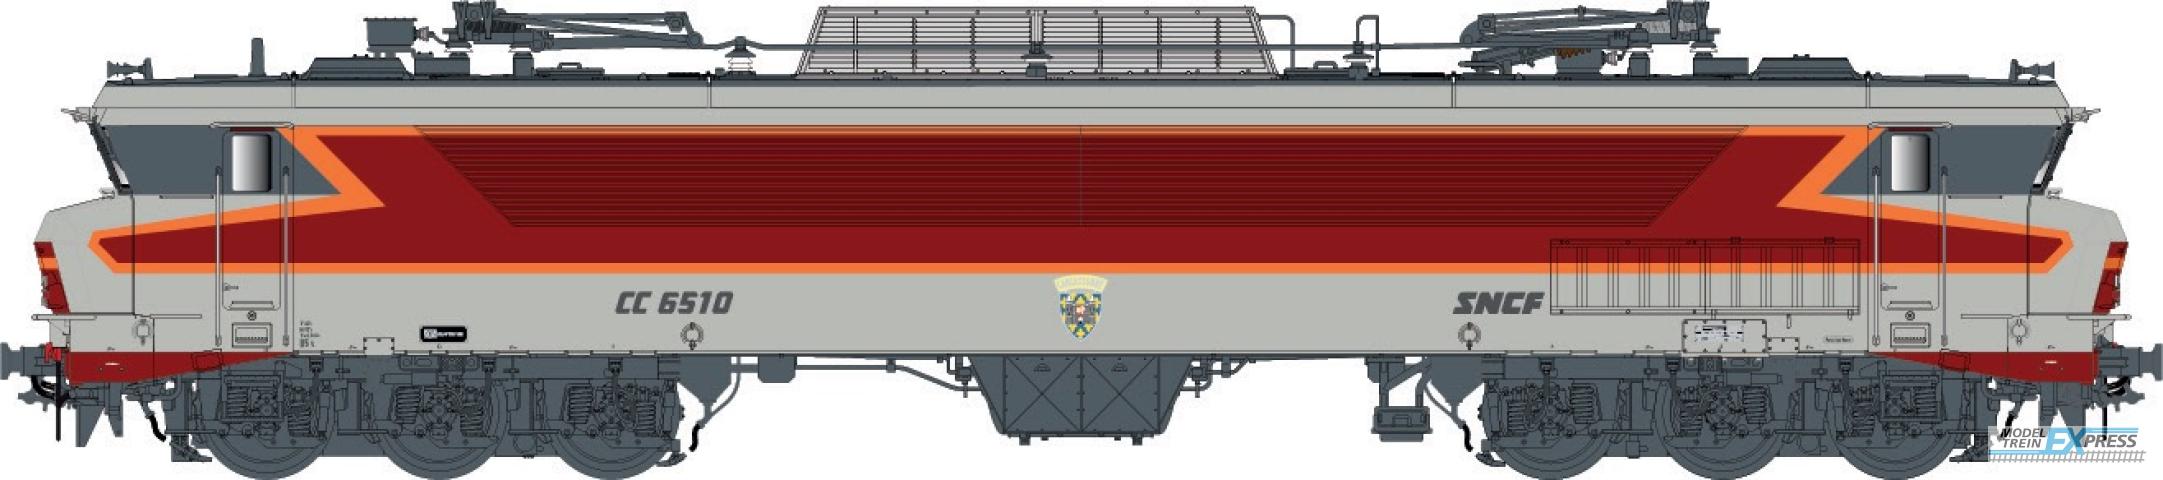 LS Models 10834S CC 6510, grey/red/orange, livery ARZENS, logo RMT  /  Ep. IV-V  /  SNCF  /  HO  /  AC SOUND  /  1 P.